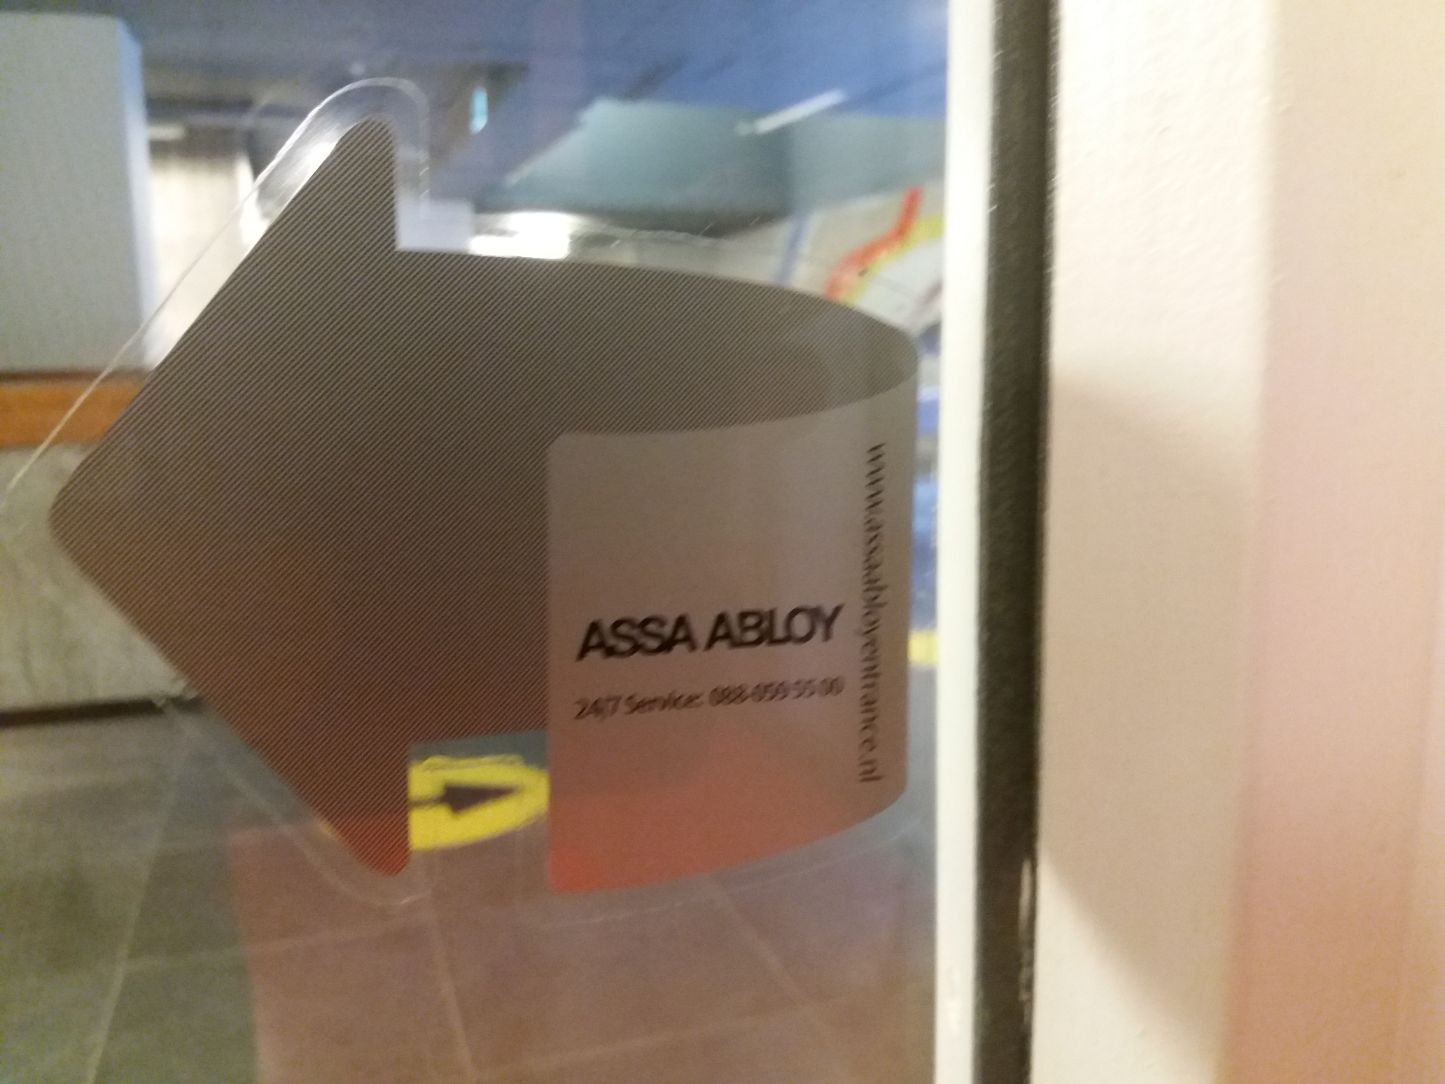 Assa-Abloy deur